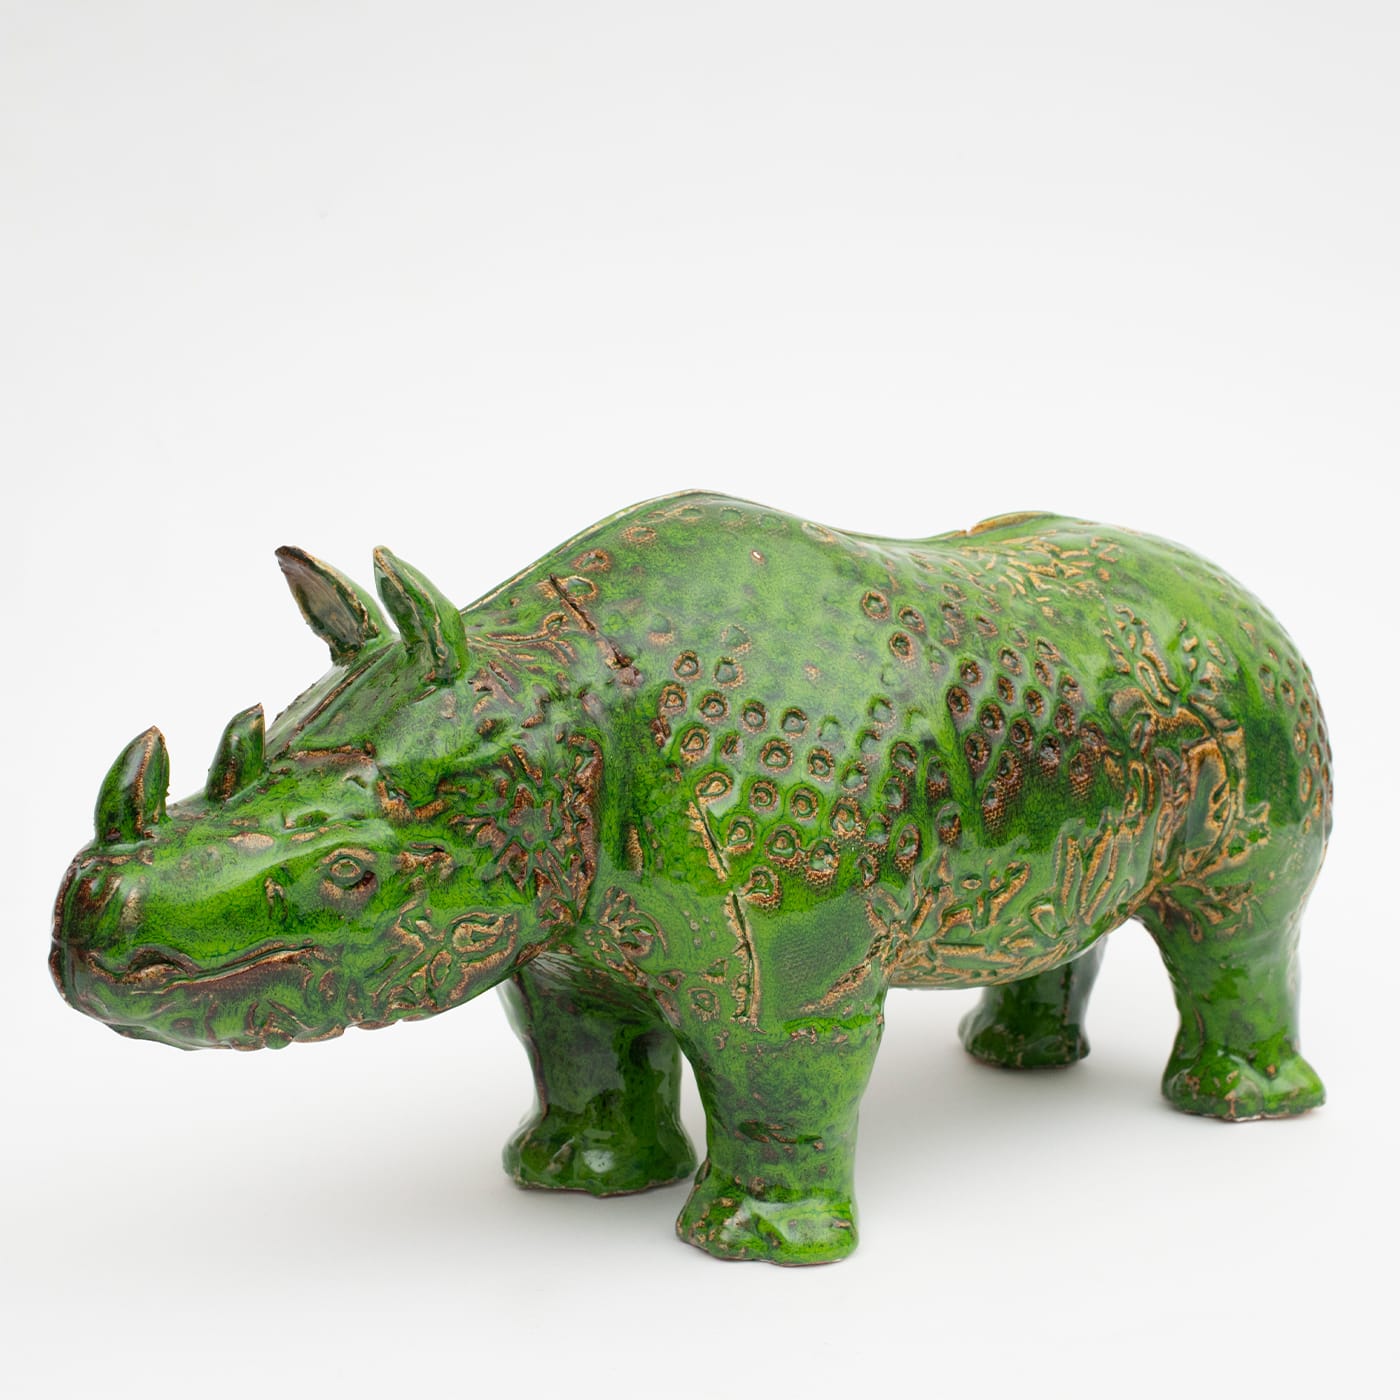 Rhino sculpture #2 - Amaaro